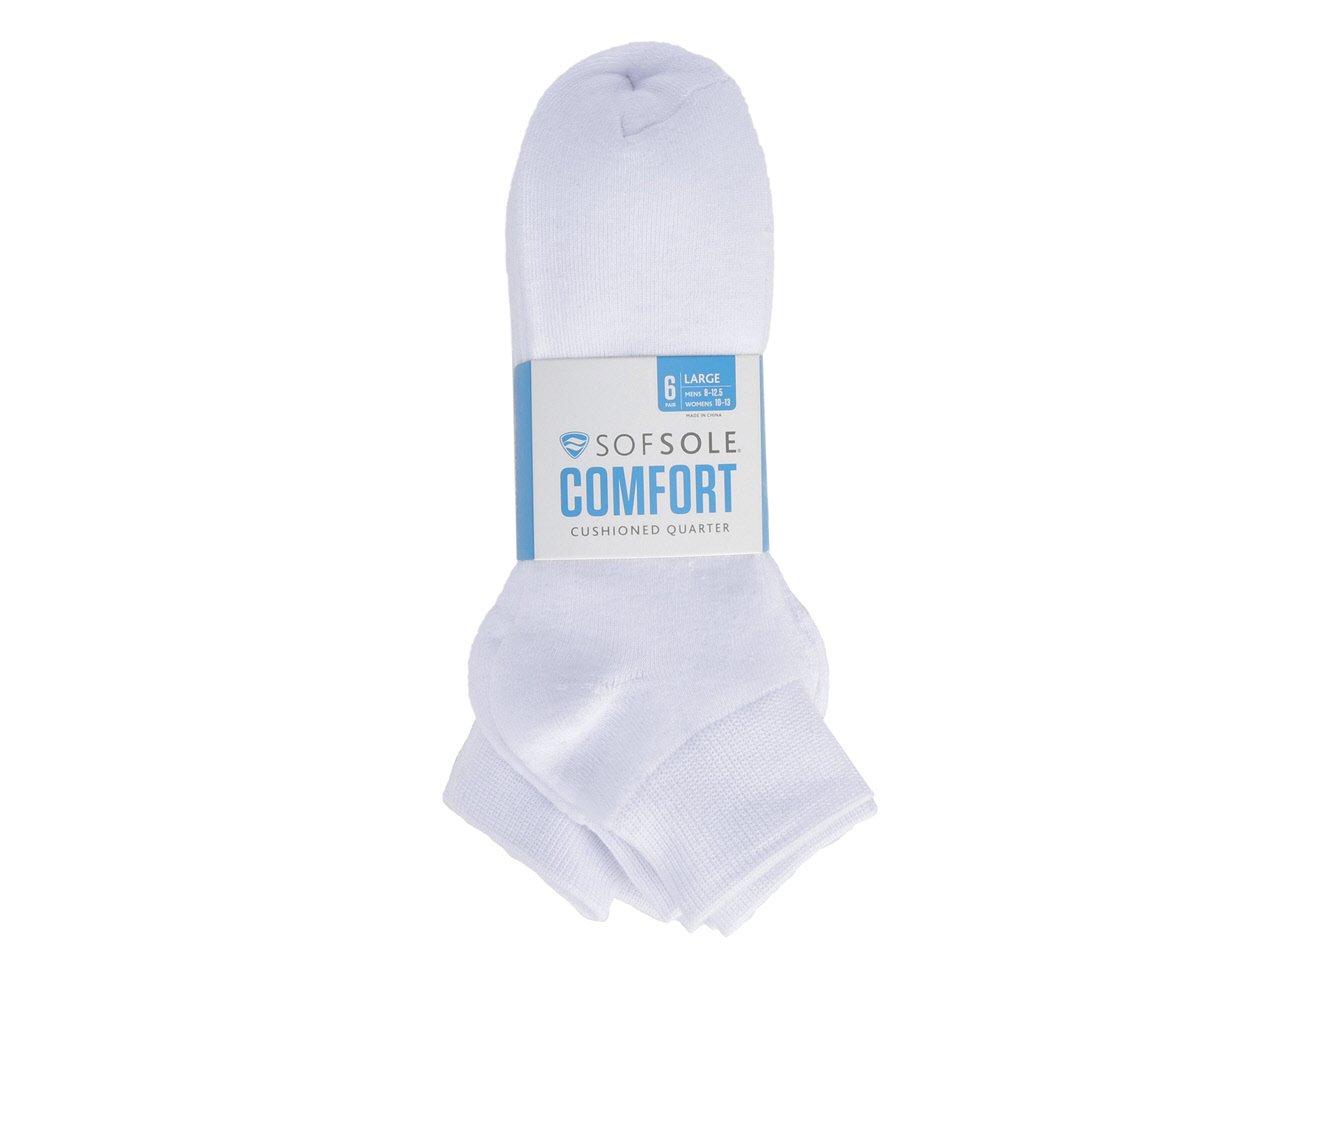 Sof Sole 6 Pair Comfort Cushioned Quarter Socks